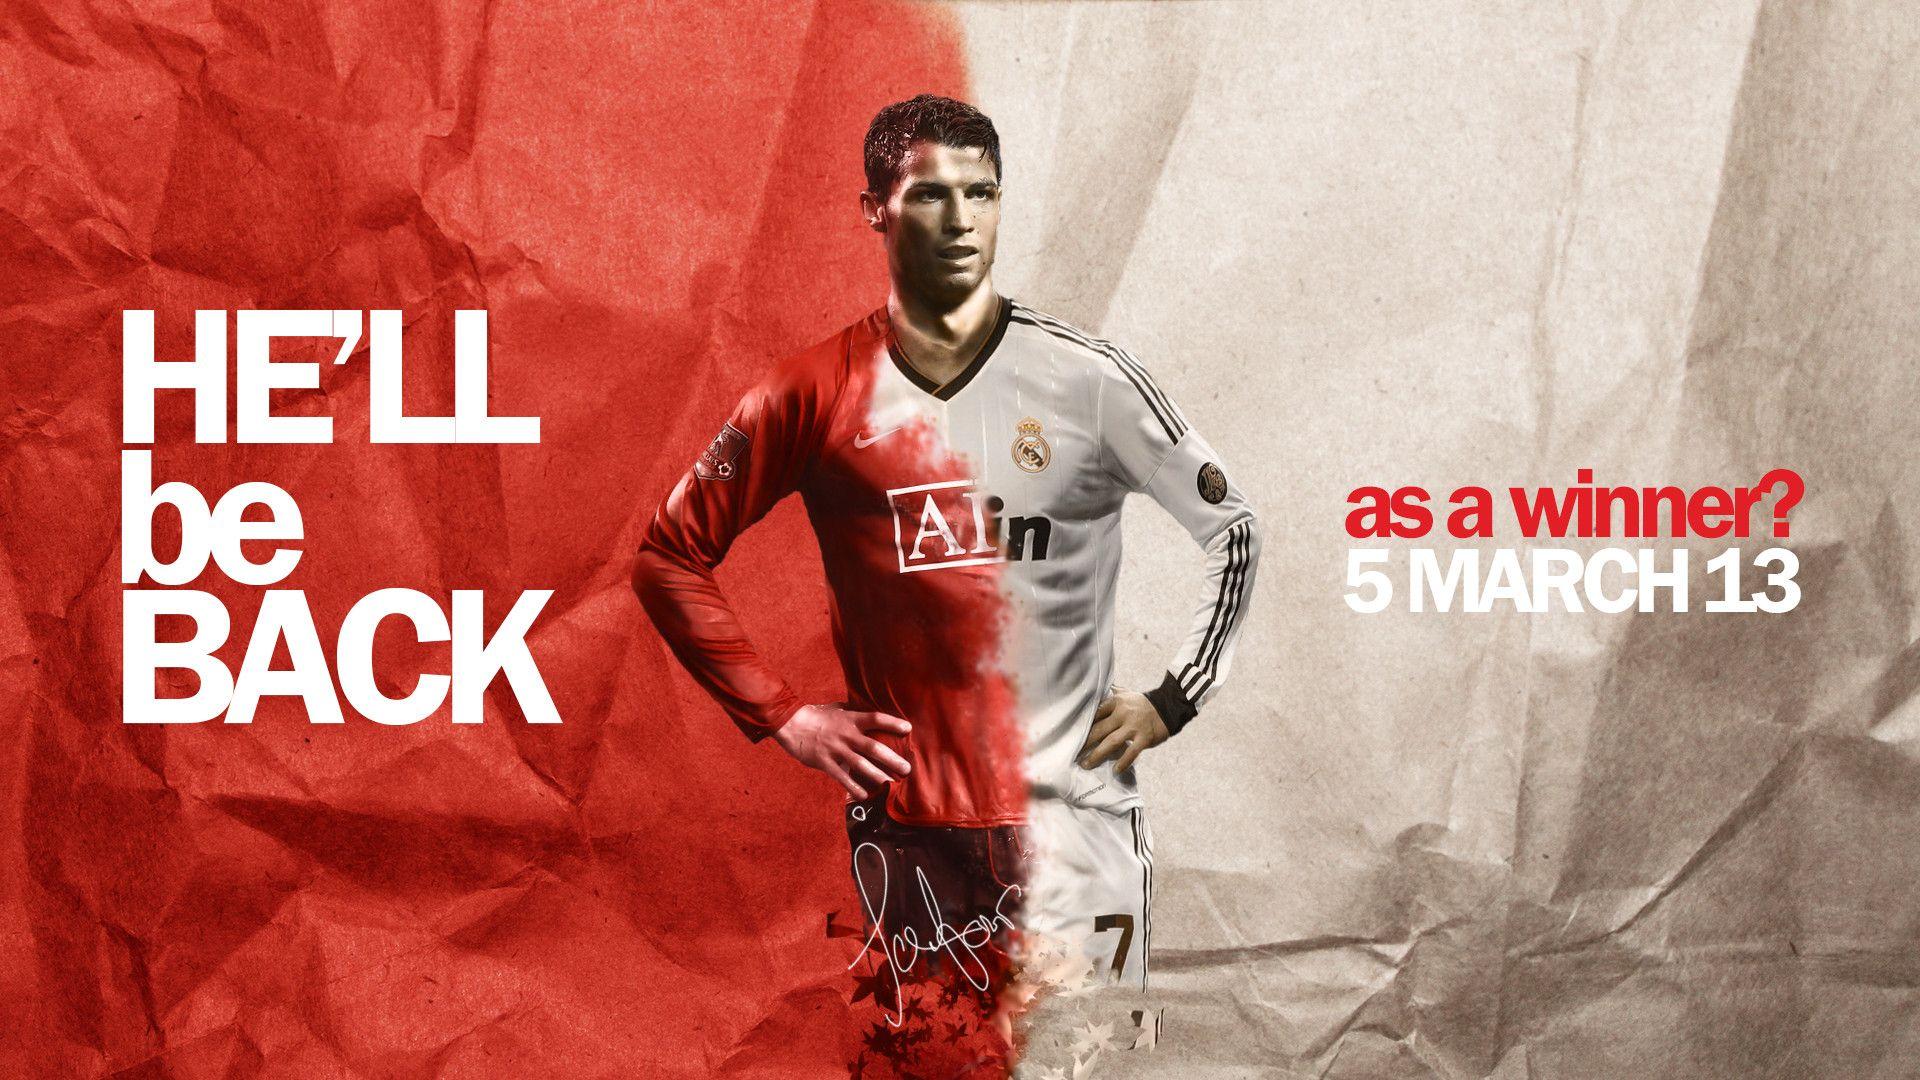 Cristiano Ronaldo HD Wallpaper And Image Free Download